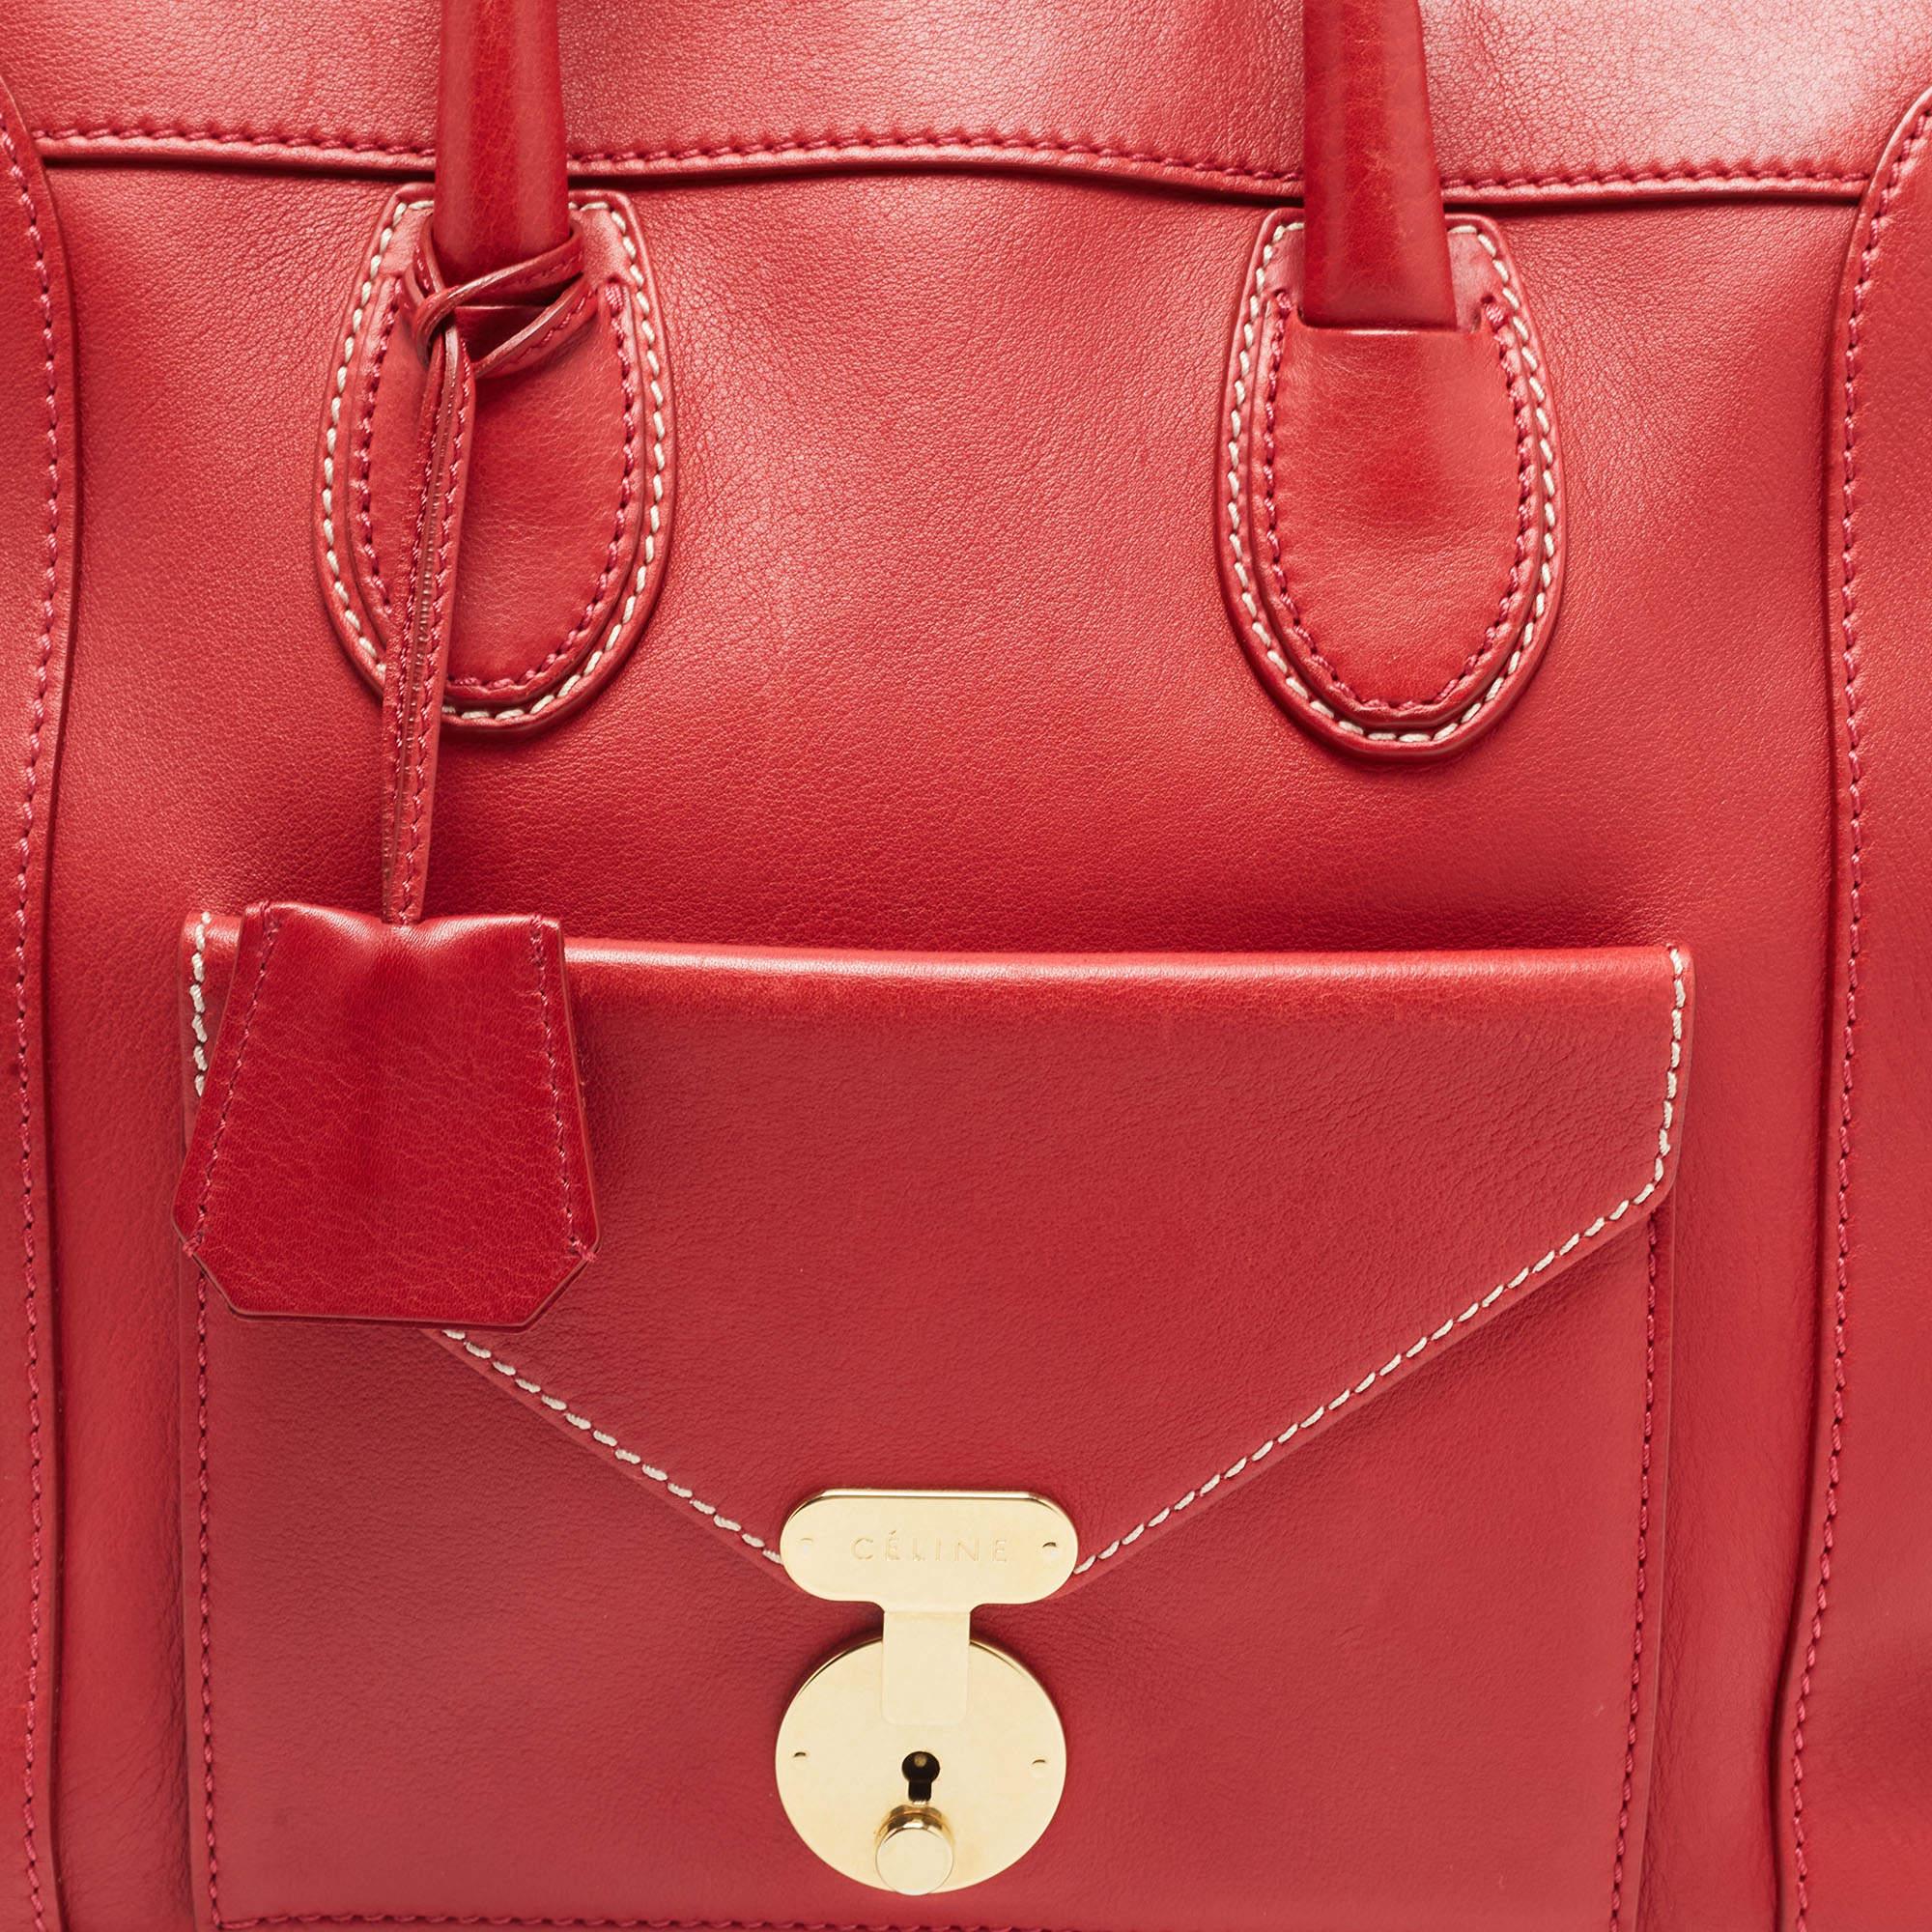 Celine Red Leather Mini Envelope Luggage Tote 2